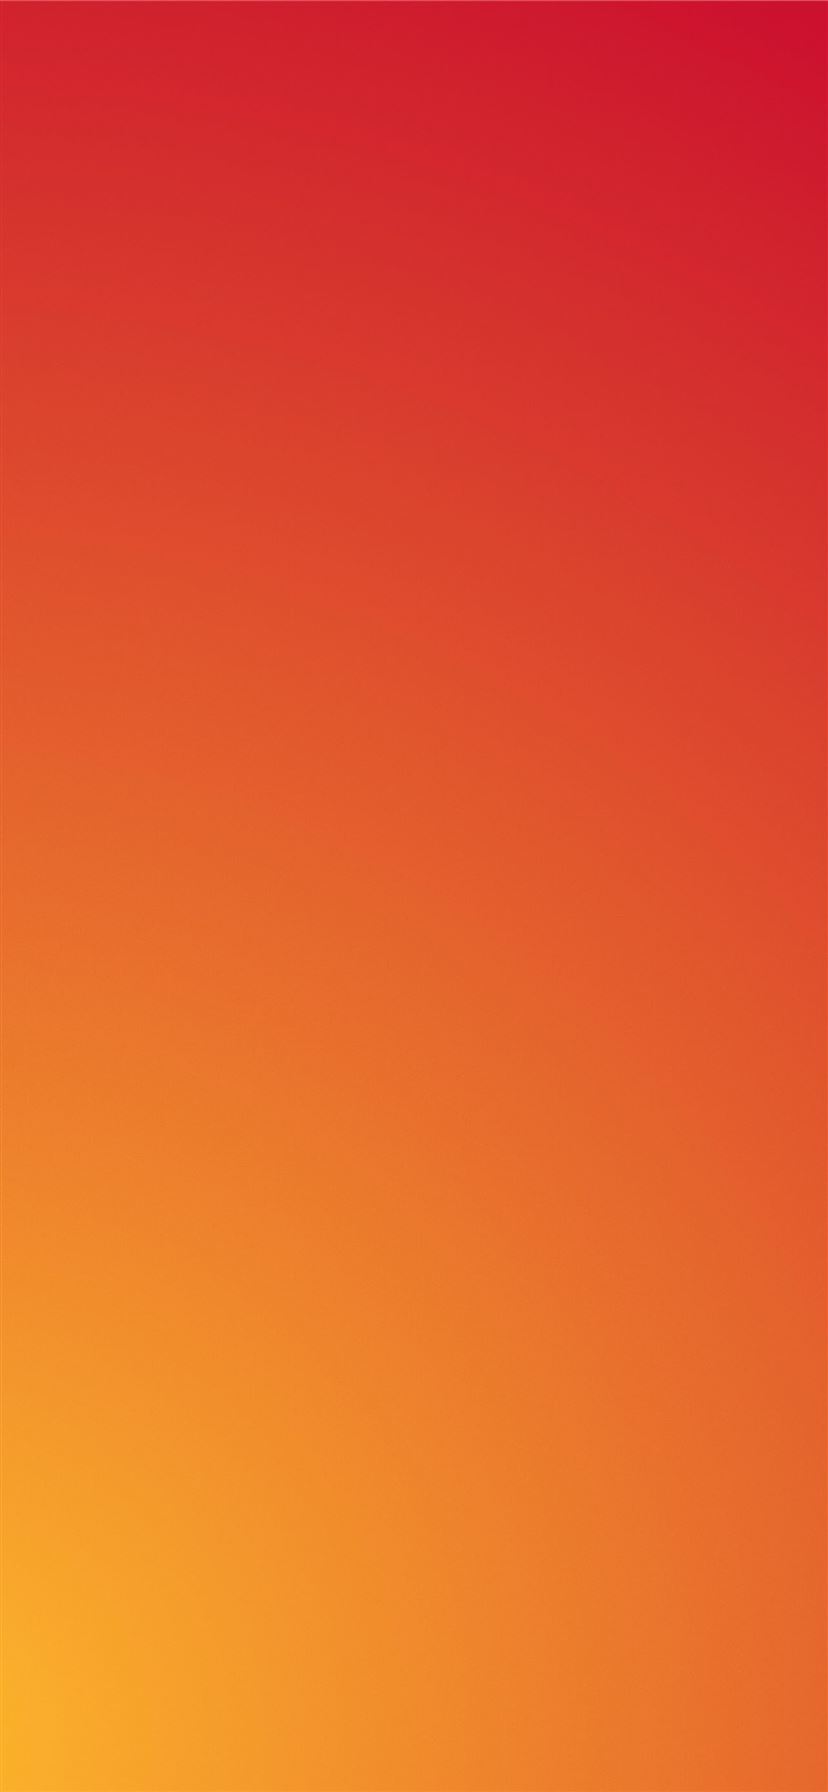 Dark orange to blood red gradient iPhone 11 wallpaper 